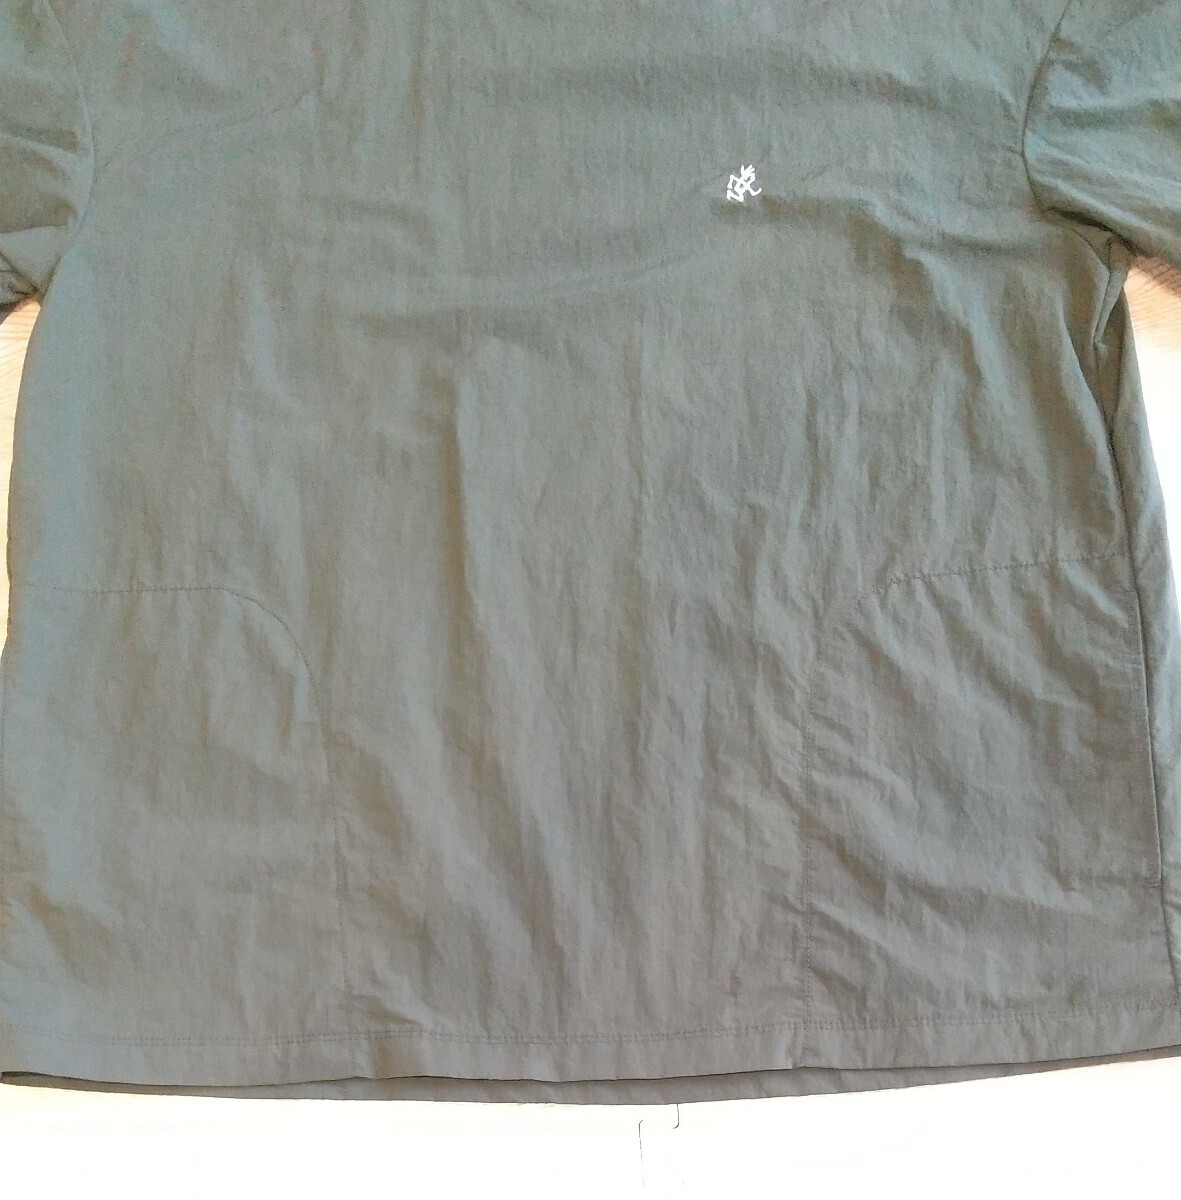 GRAMICCI/グラミチ CAMP TEE/キャンプTシャツ サイズS カラー:カーキ 中古品の画像4